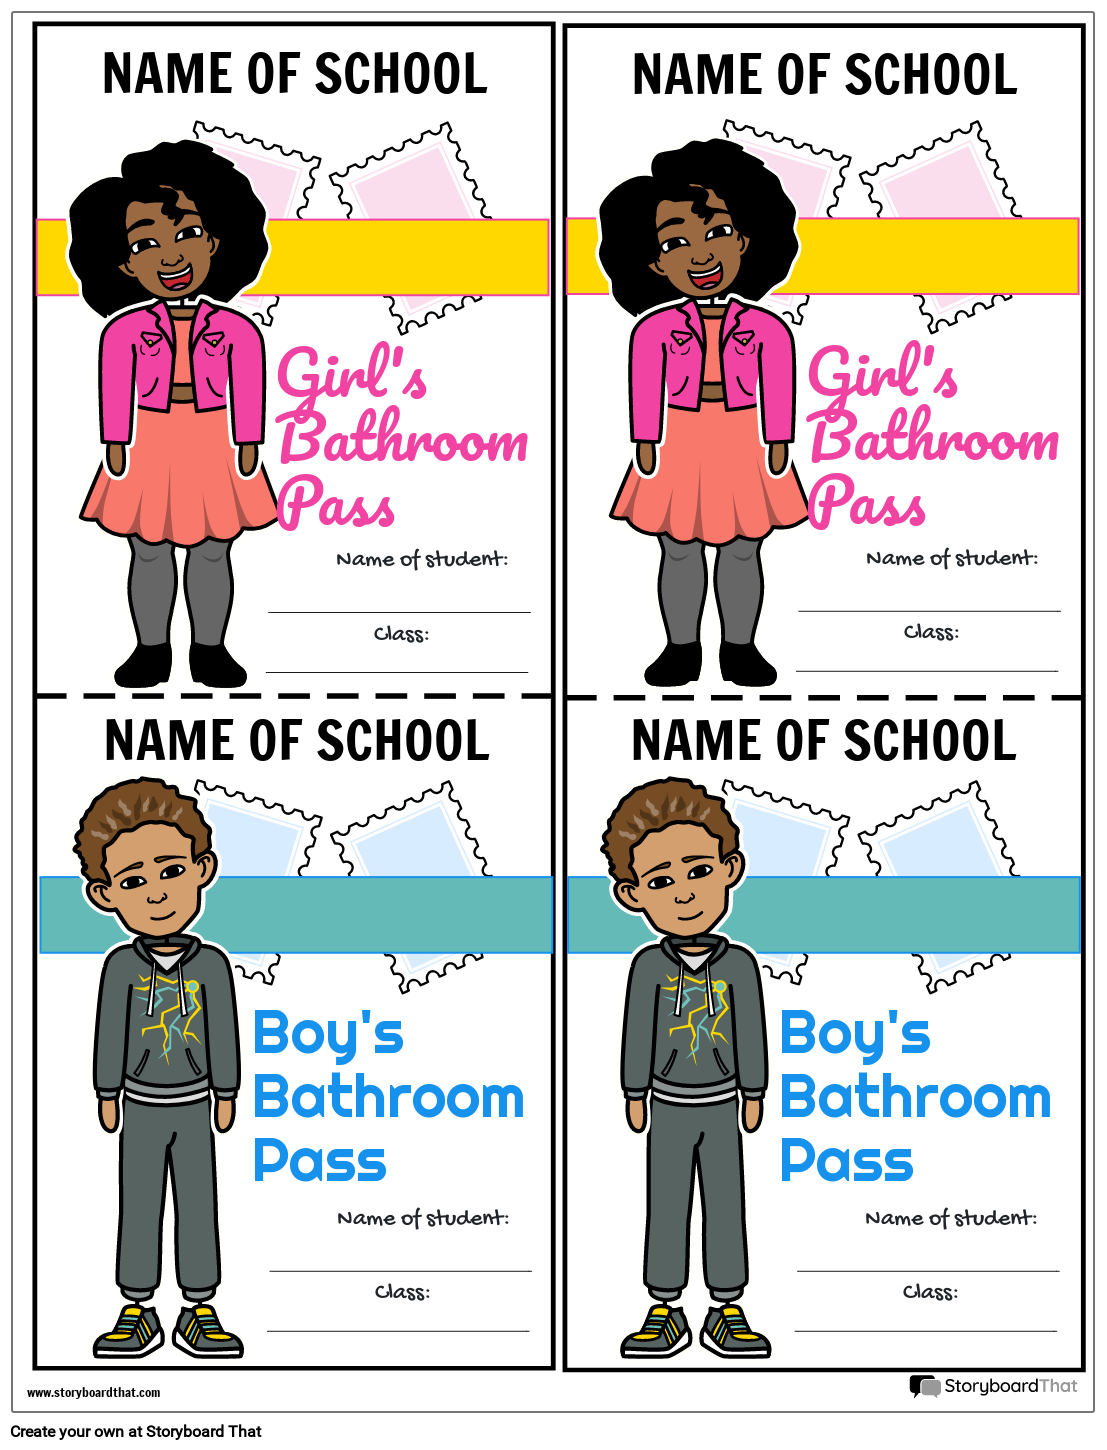 Boys and Girls Bathroom Pass